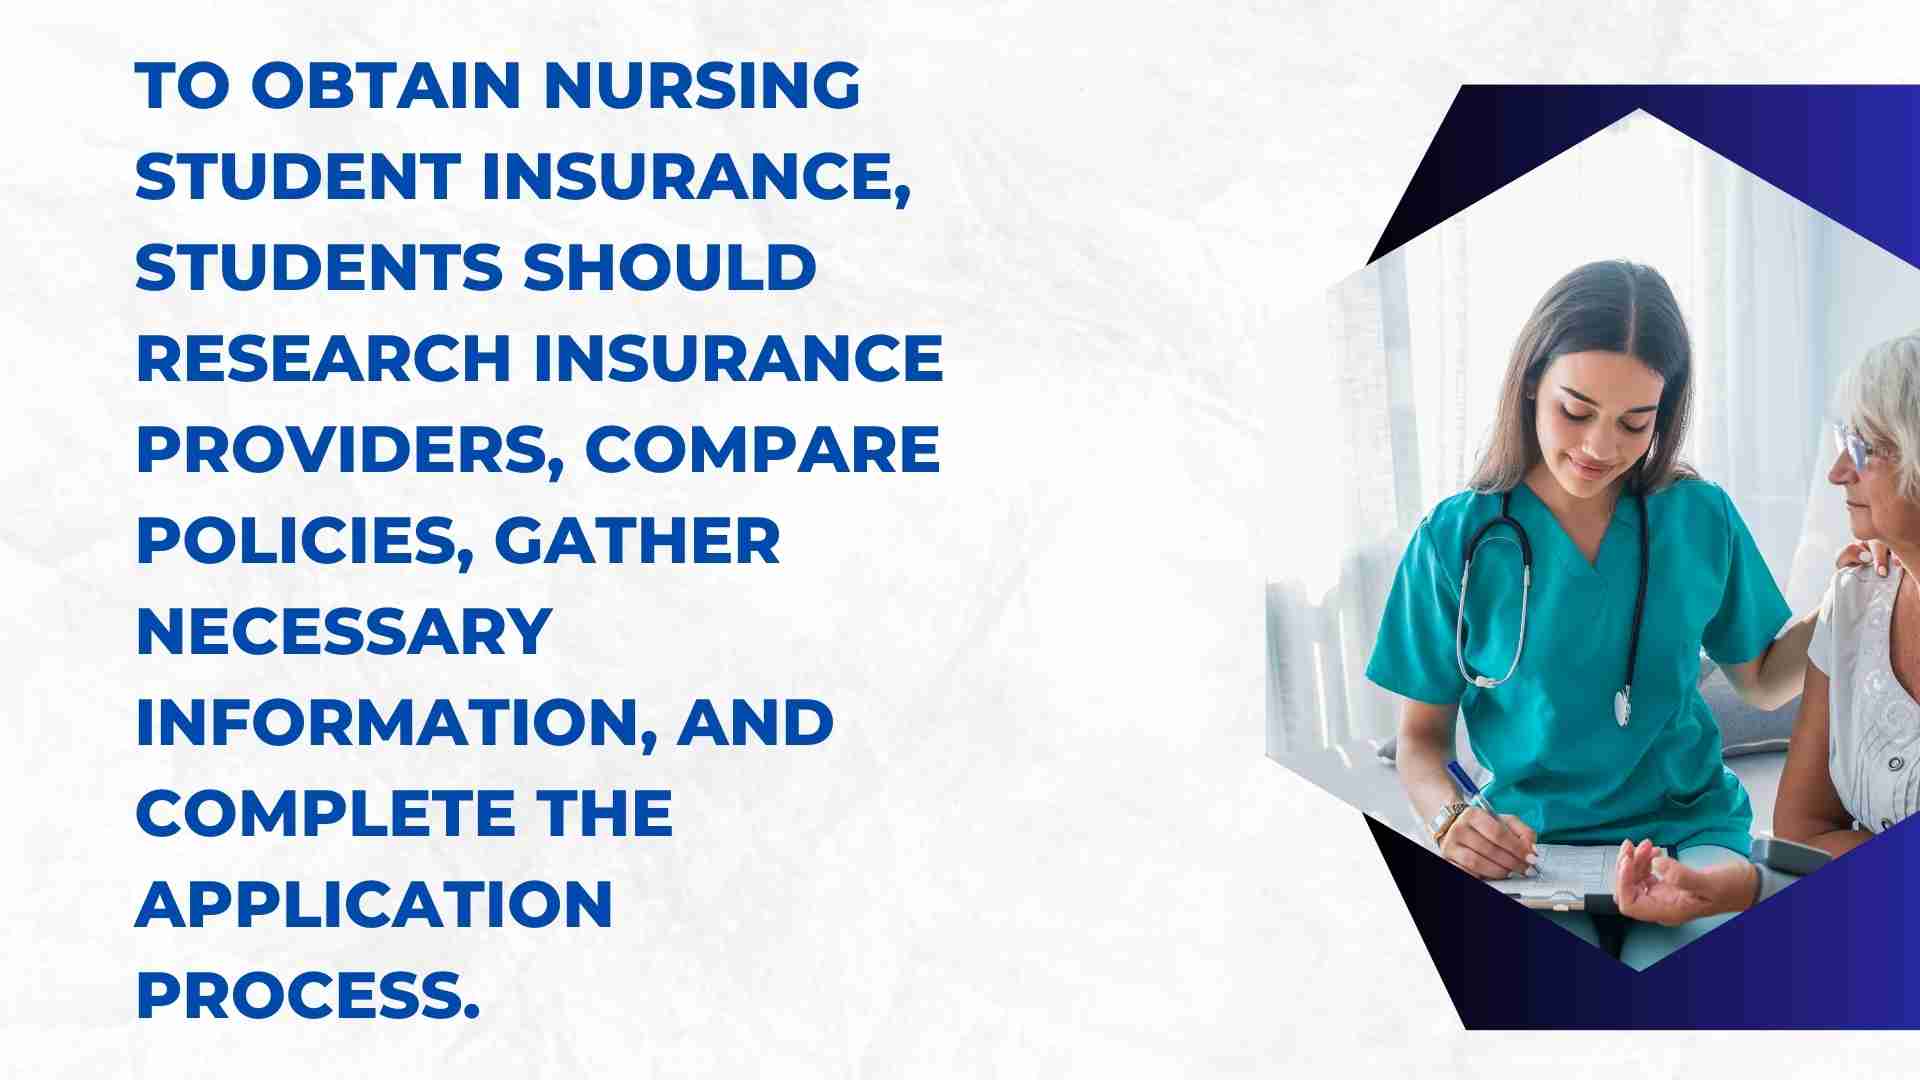 Steps to Obtain Nursing Student Insurance